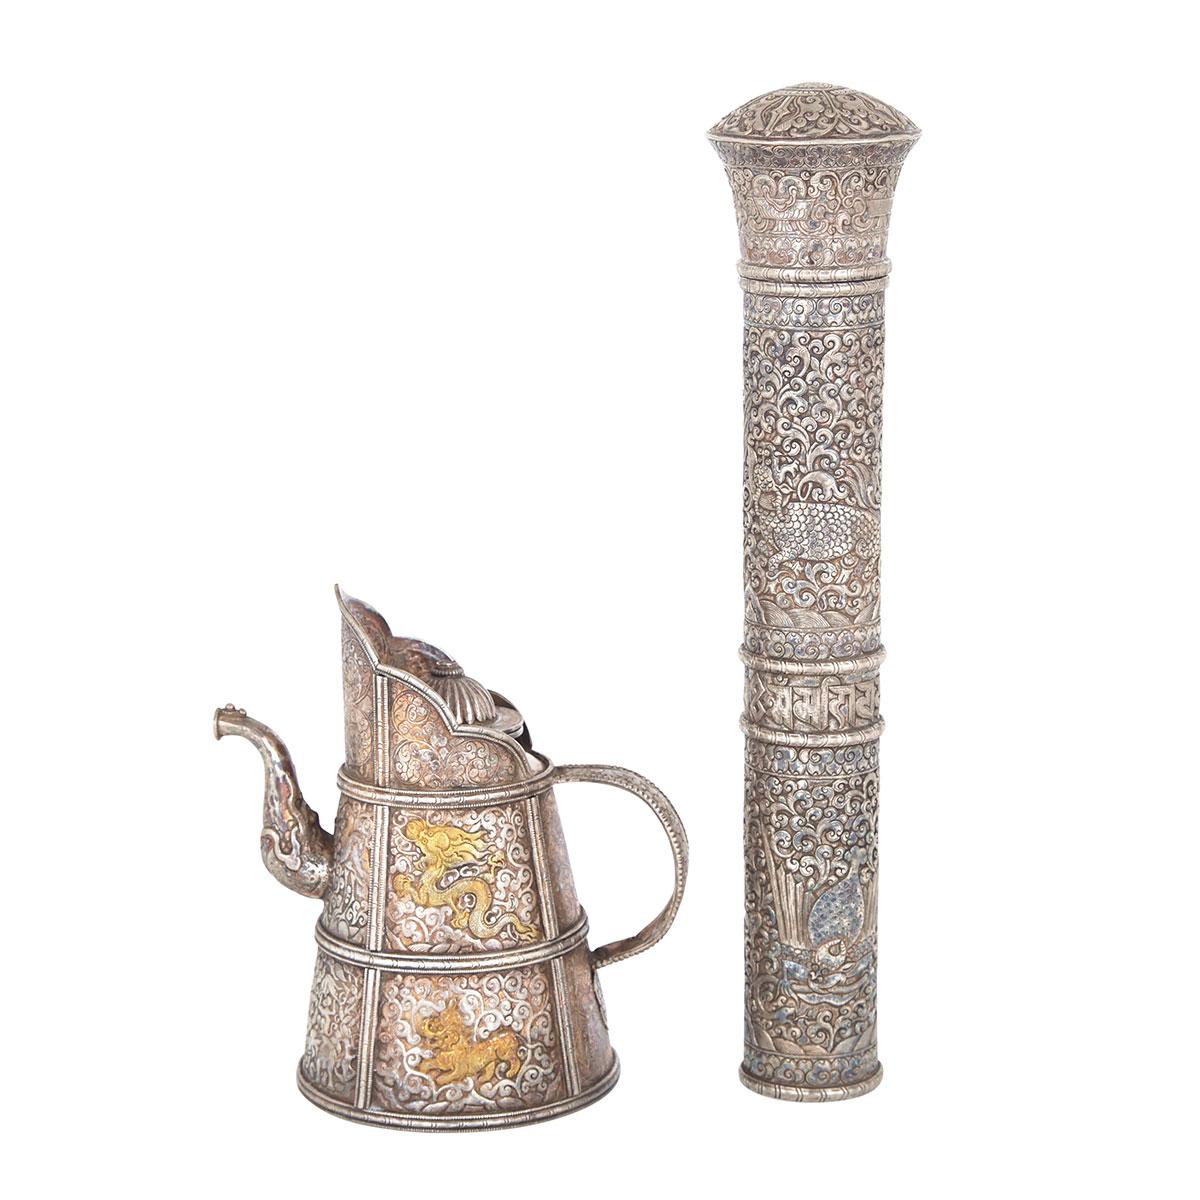 Parcel Gilt Silver Ritual Ewer (Domu Pot) and Incense Storage Box, Tibet 18th/19th Century